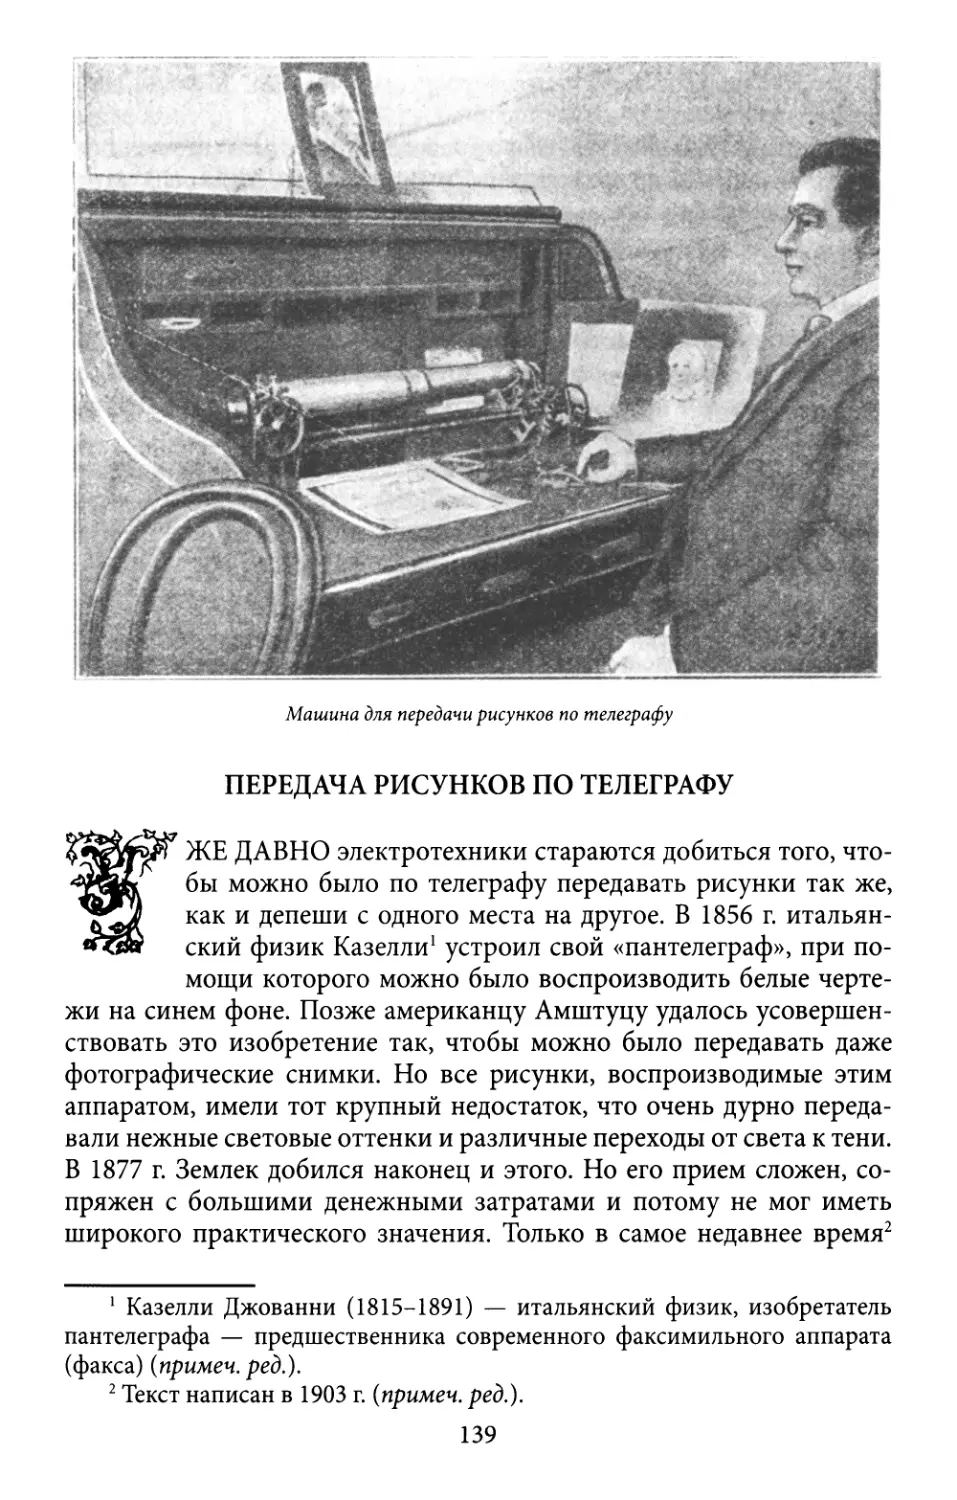 Передача рисунков по телеграфу